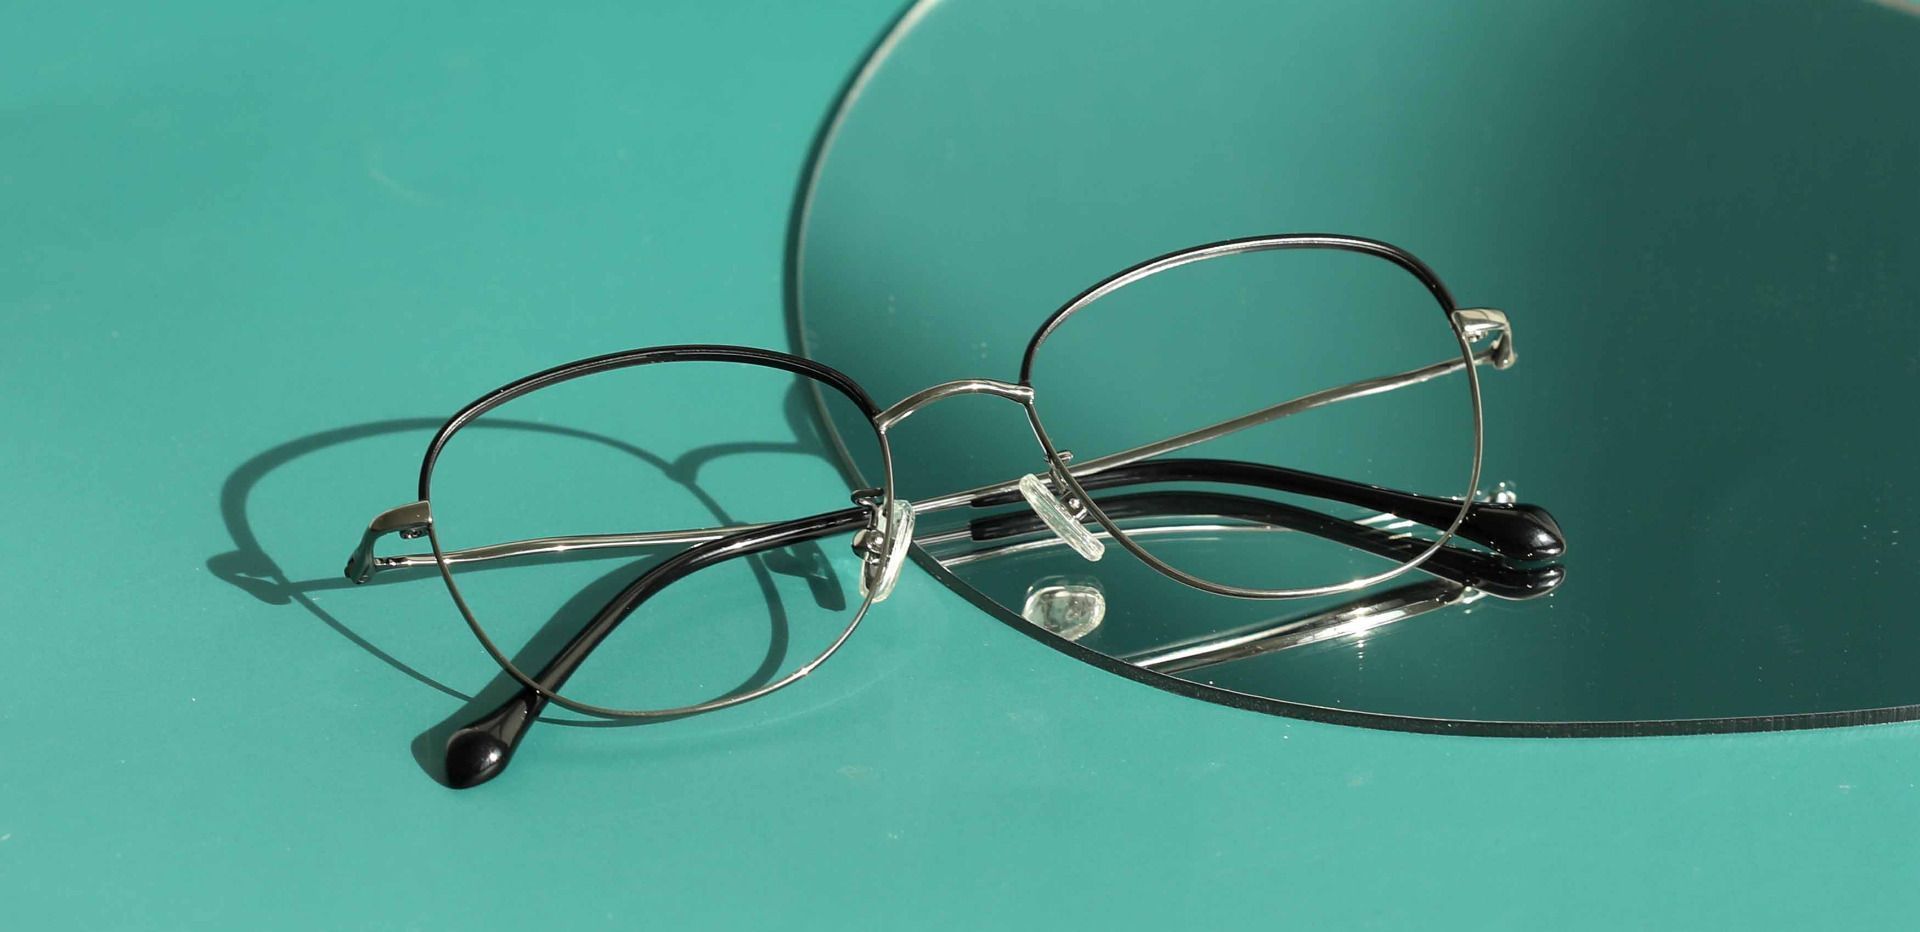 Belcourt Oval Non-Rx Glasses - Black